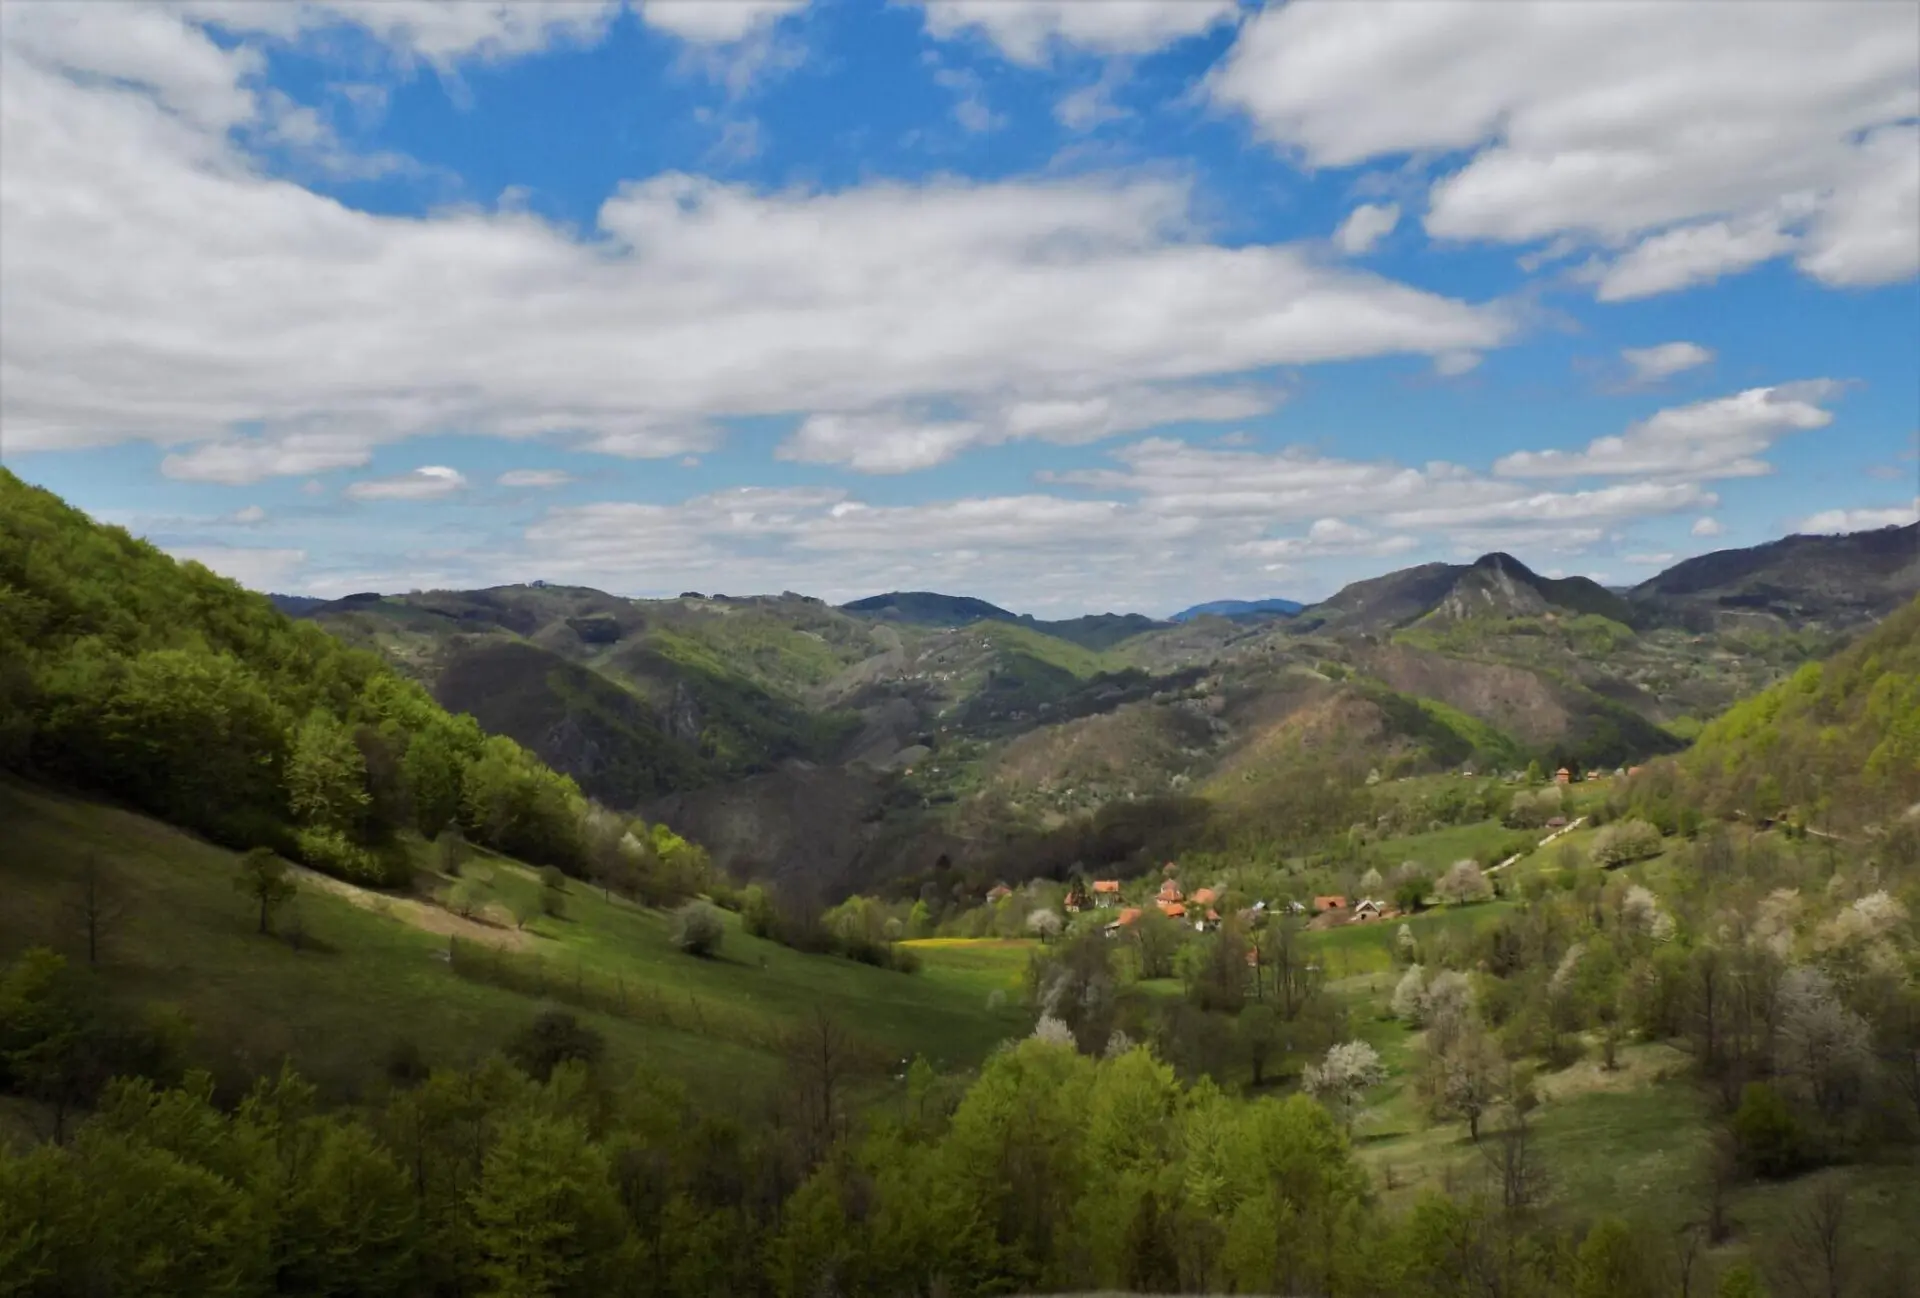 Rogačica village in western Serbia, nestled along the hills.